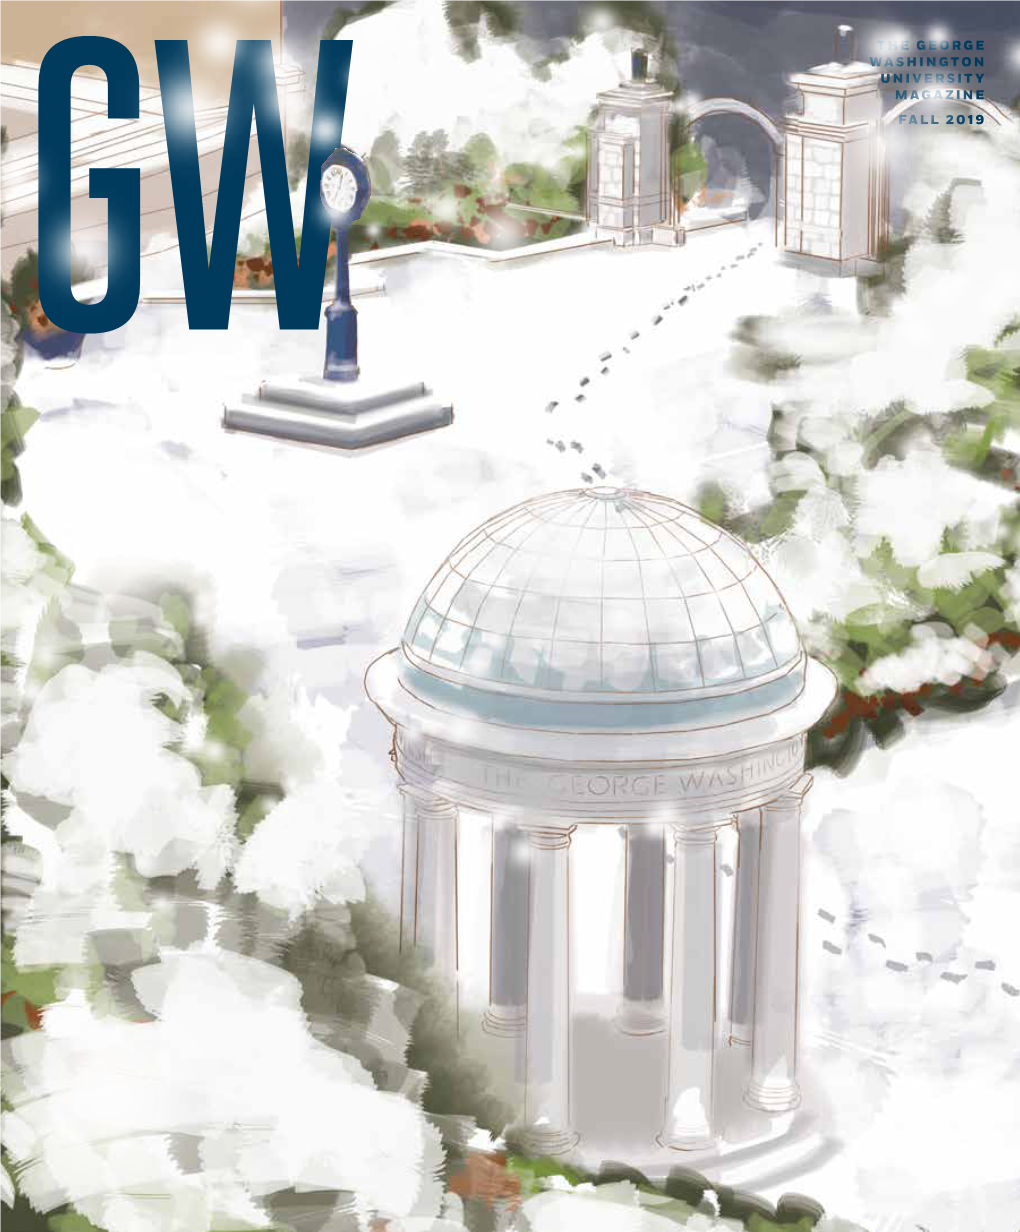 THE GEORGE WASHINGTON UNIVERSITY MAGAZINE FALL 2019 Gw Magazine / Fall 2019 GW MAGAZINE FALL 2019 a MAGAZINE for ALUMNI and FRIENDS CONTENTS